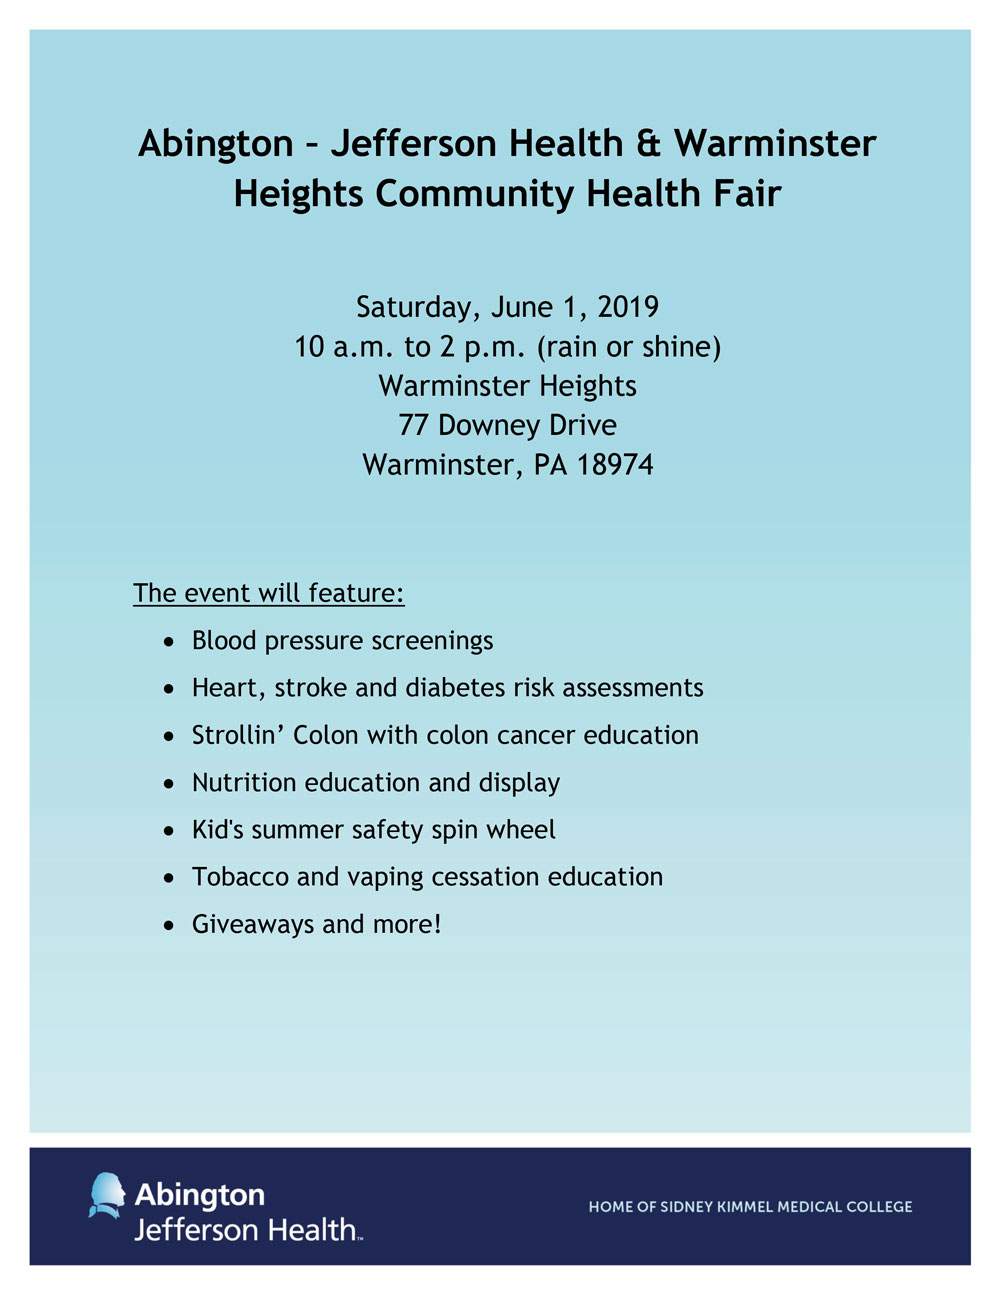 AJH-Warminster-Heights-Health-Fair